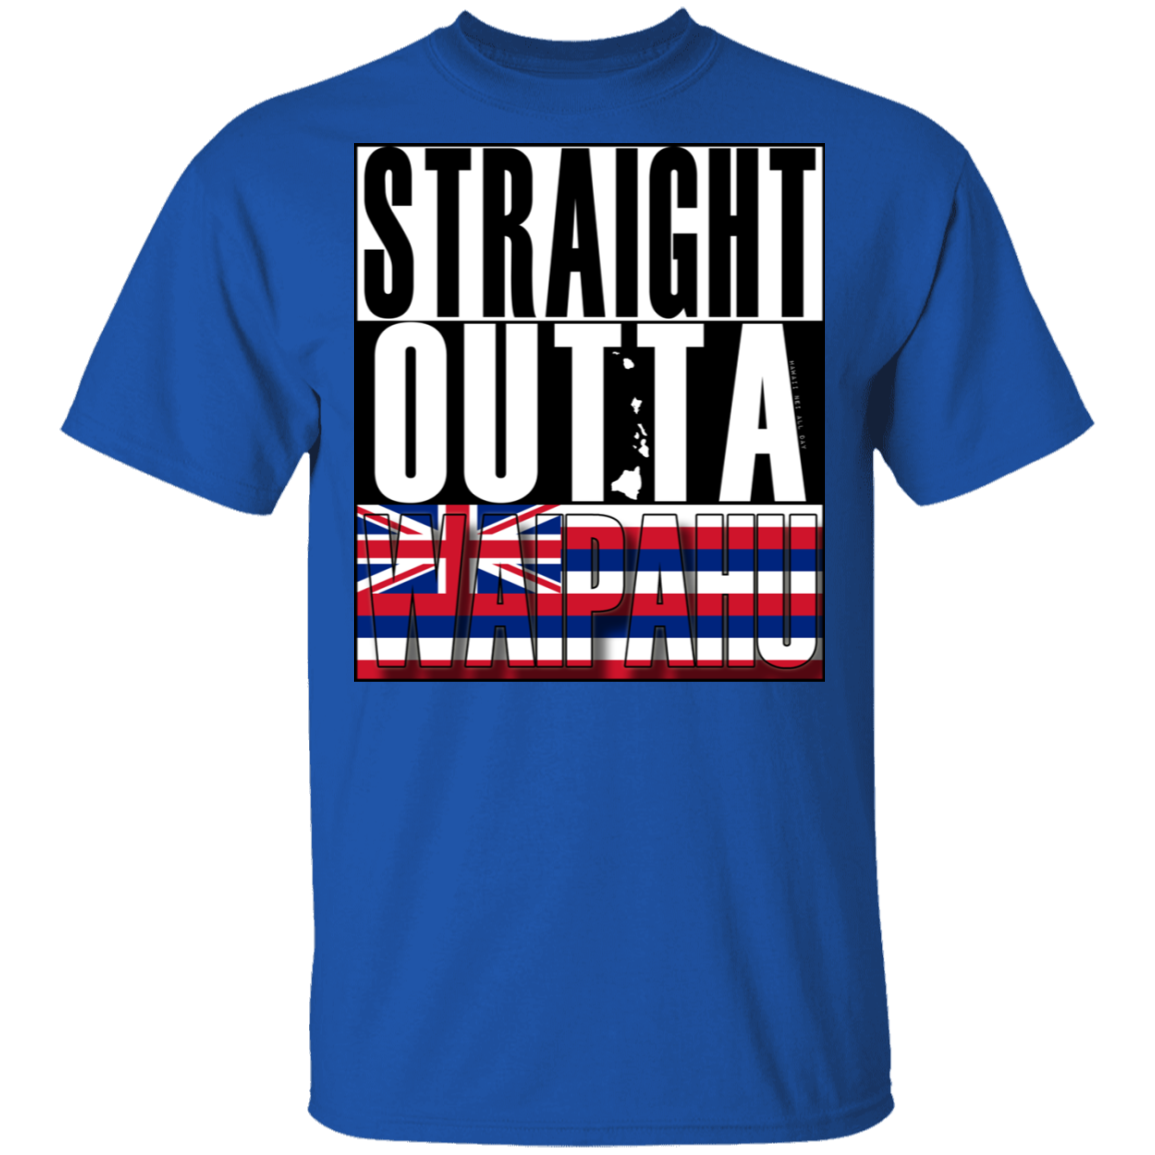 Straight Outta Waipahu T-Shirt, T-Shirts, Hawaii Nei All Day